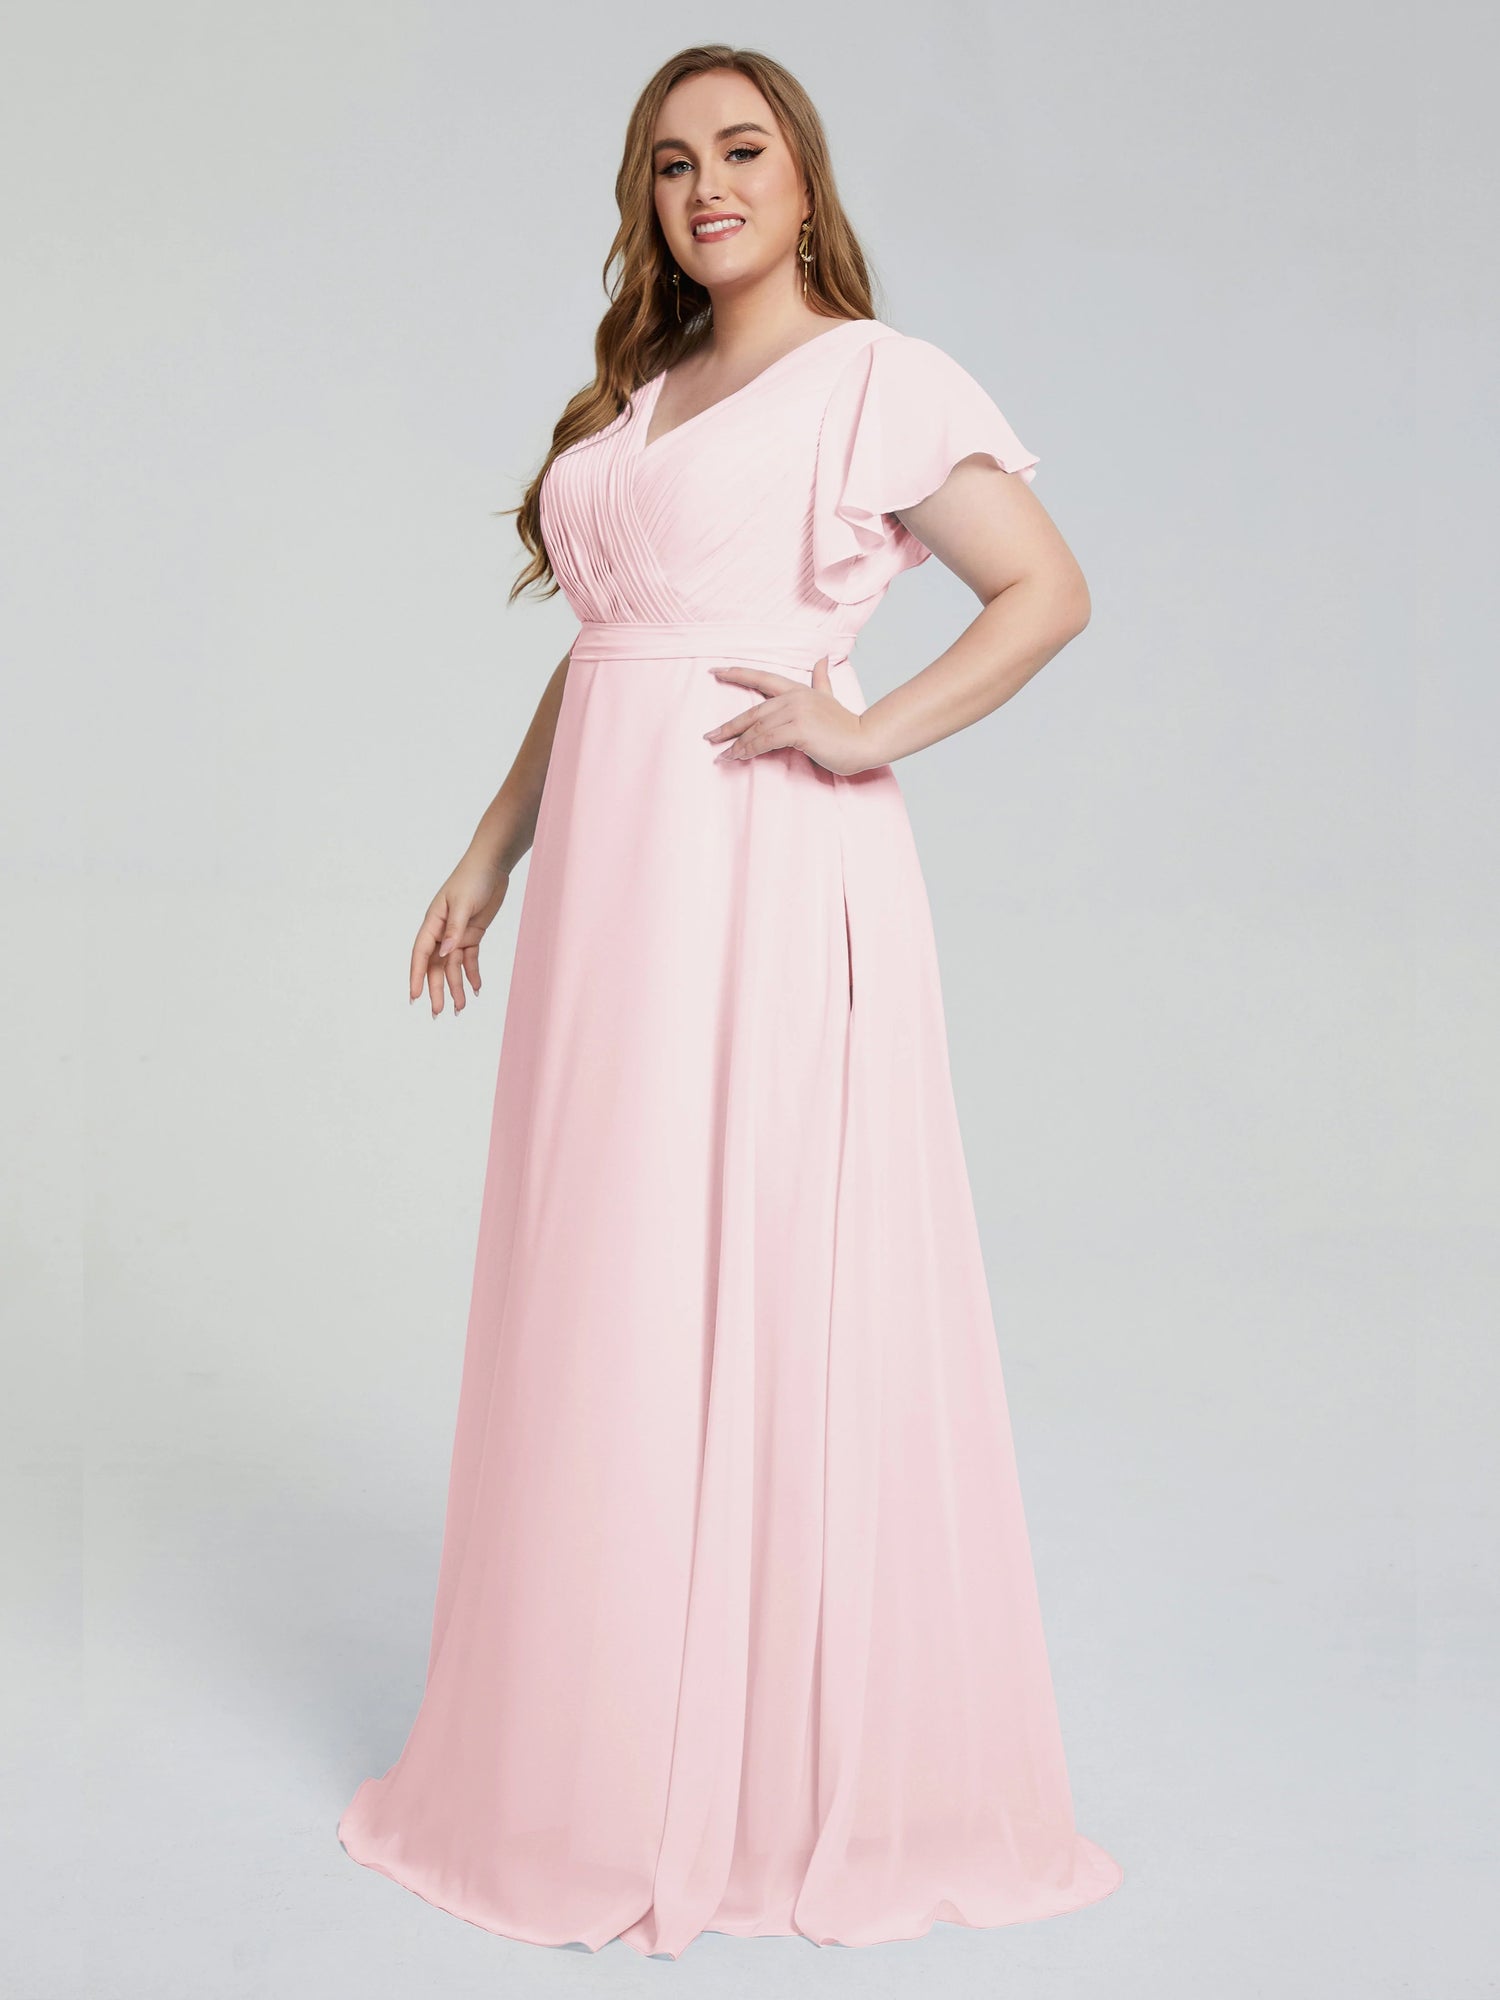 plus size pink wedding dress